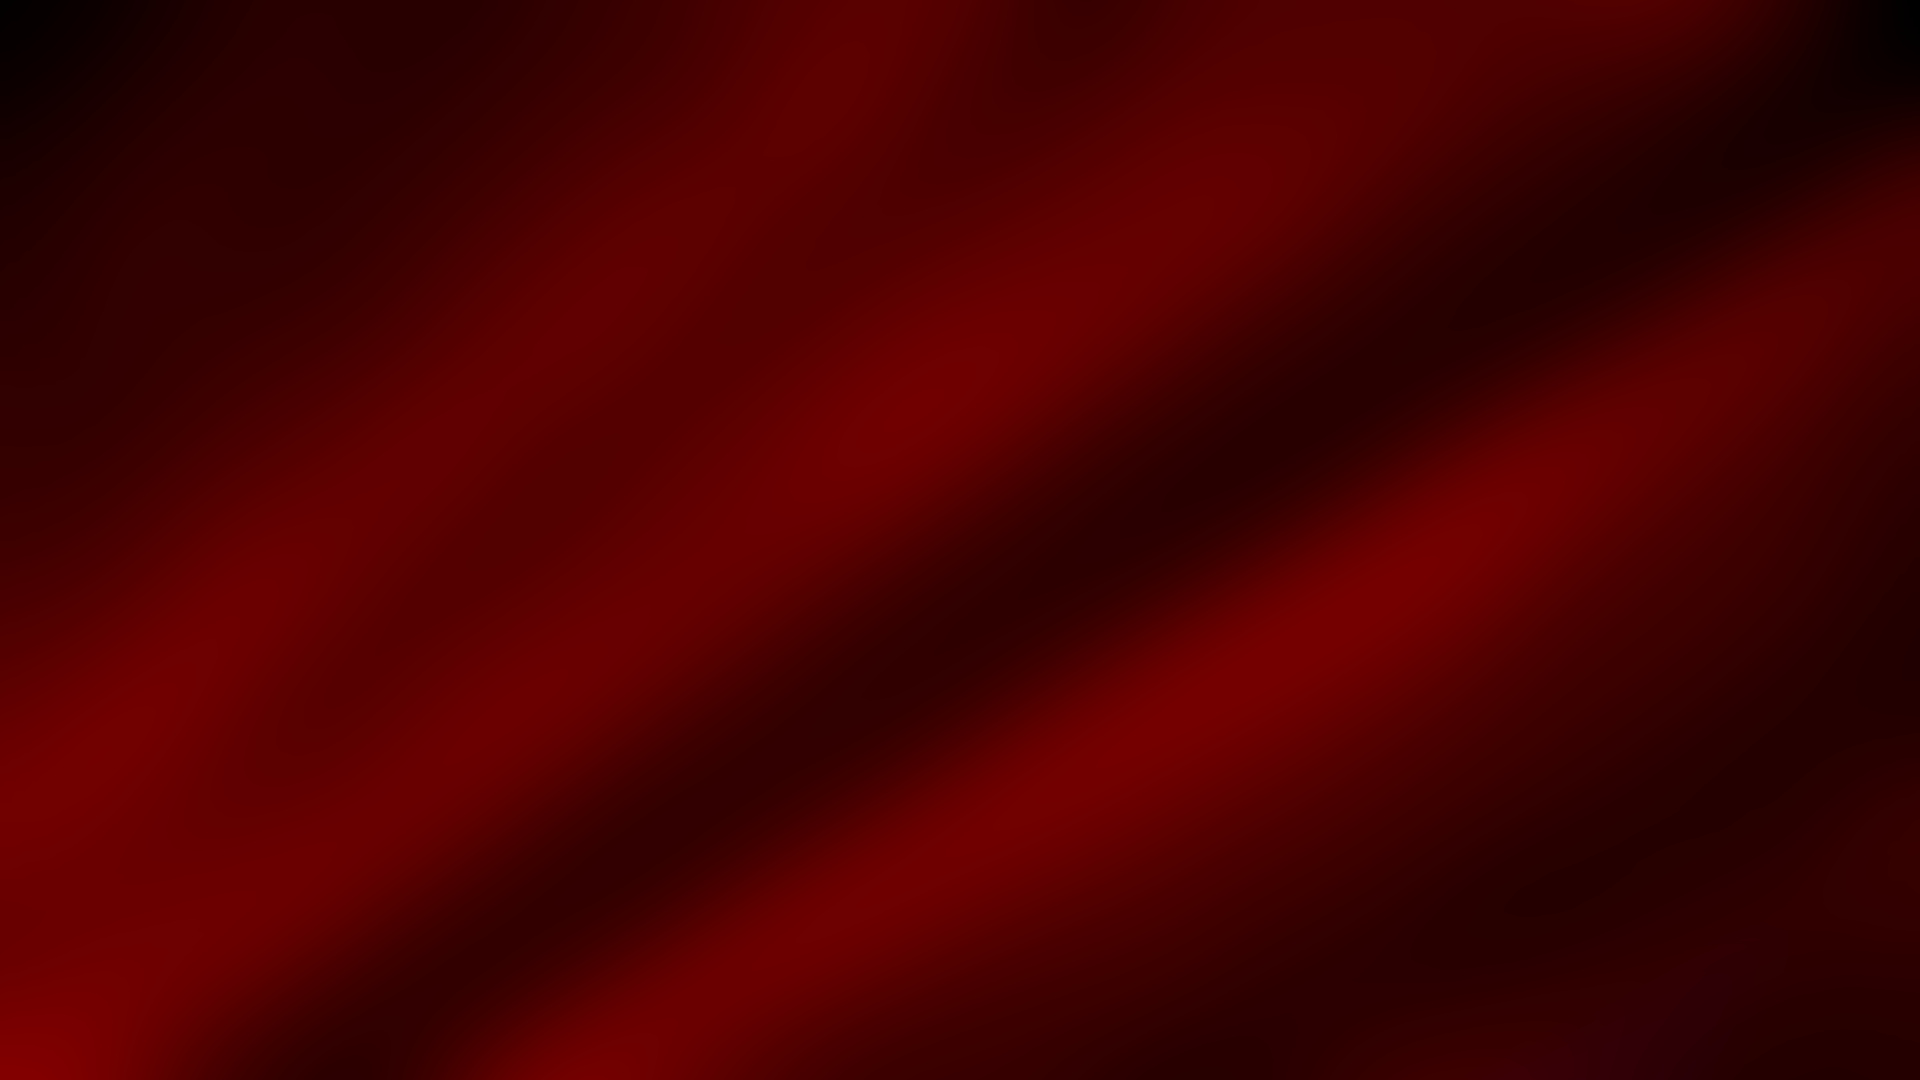 Solid Dark Red Wallpaper Blurry Desktop